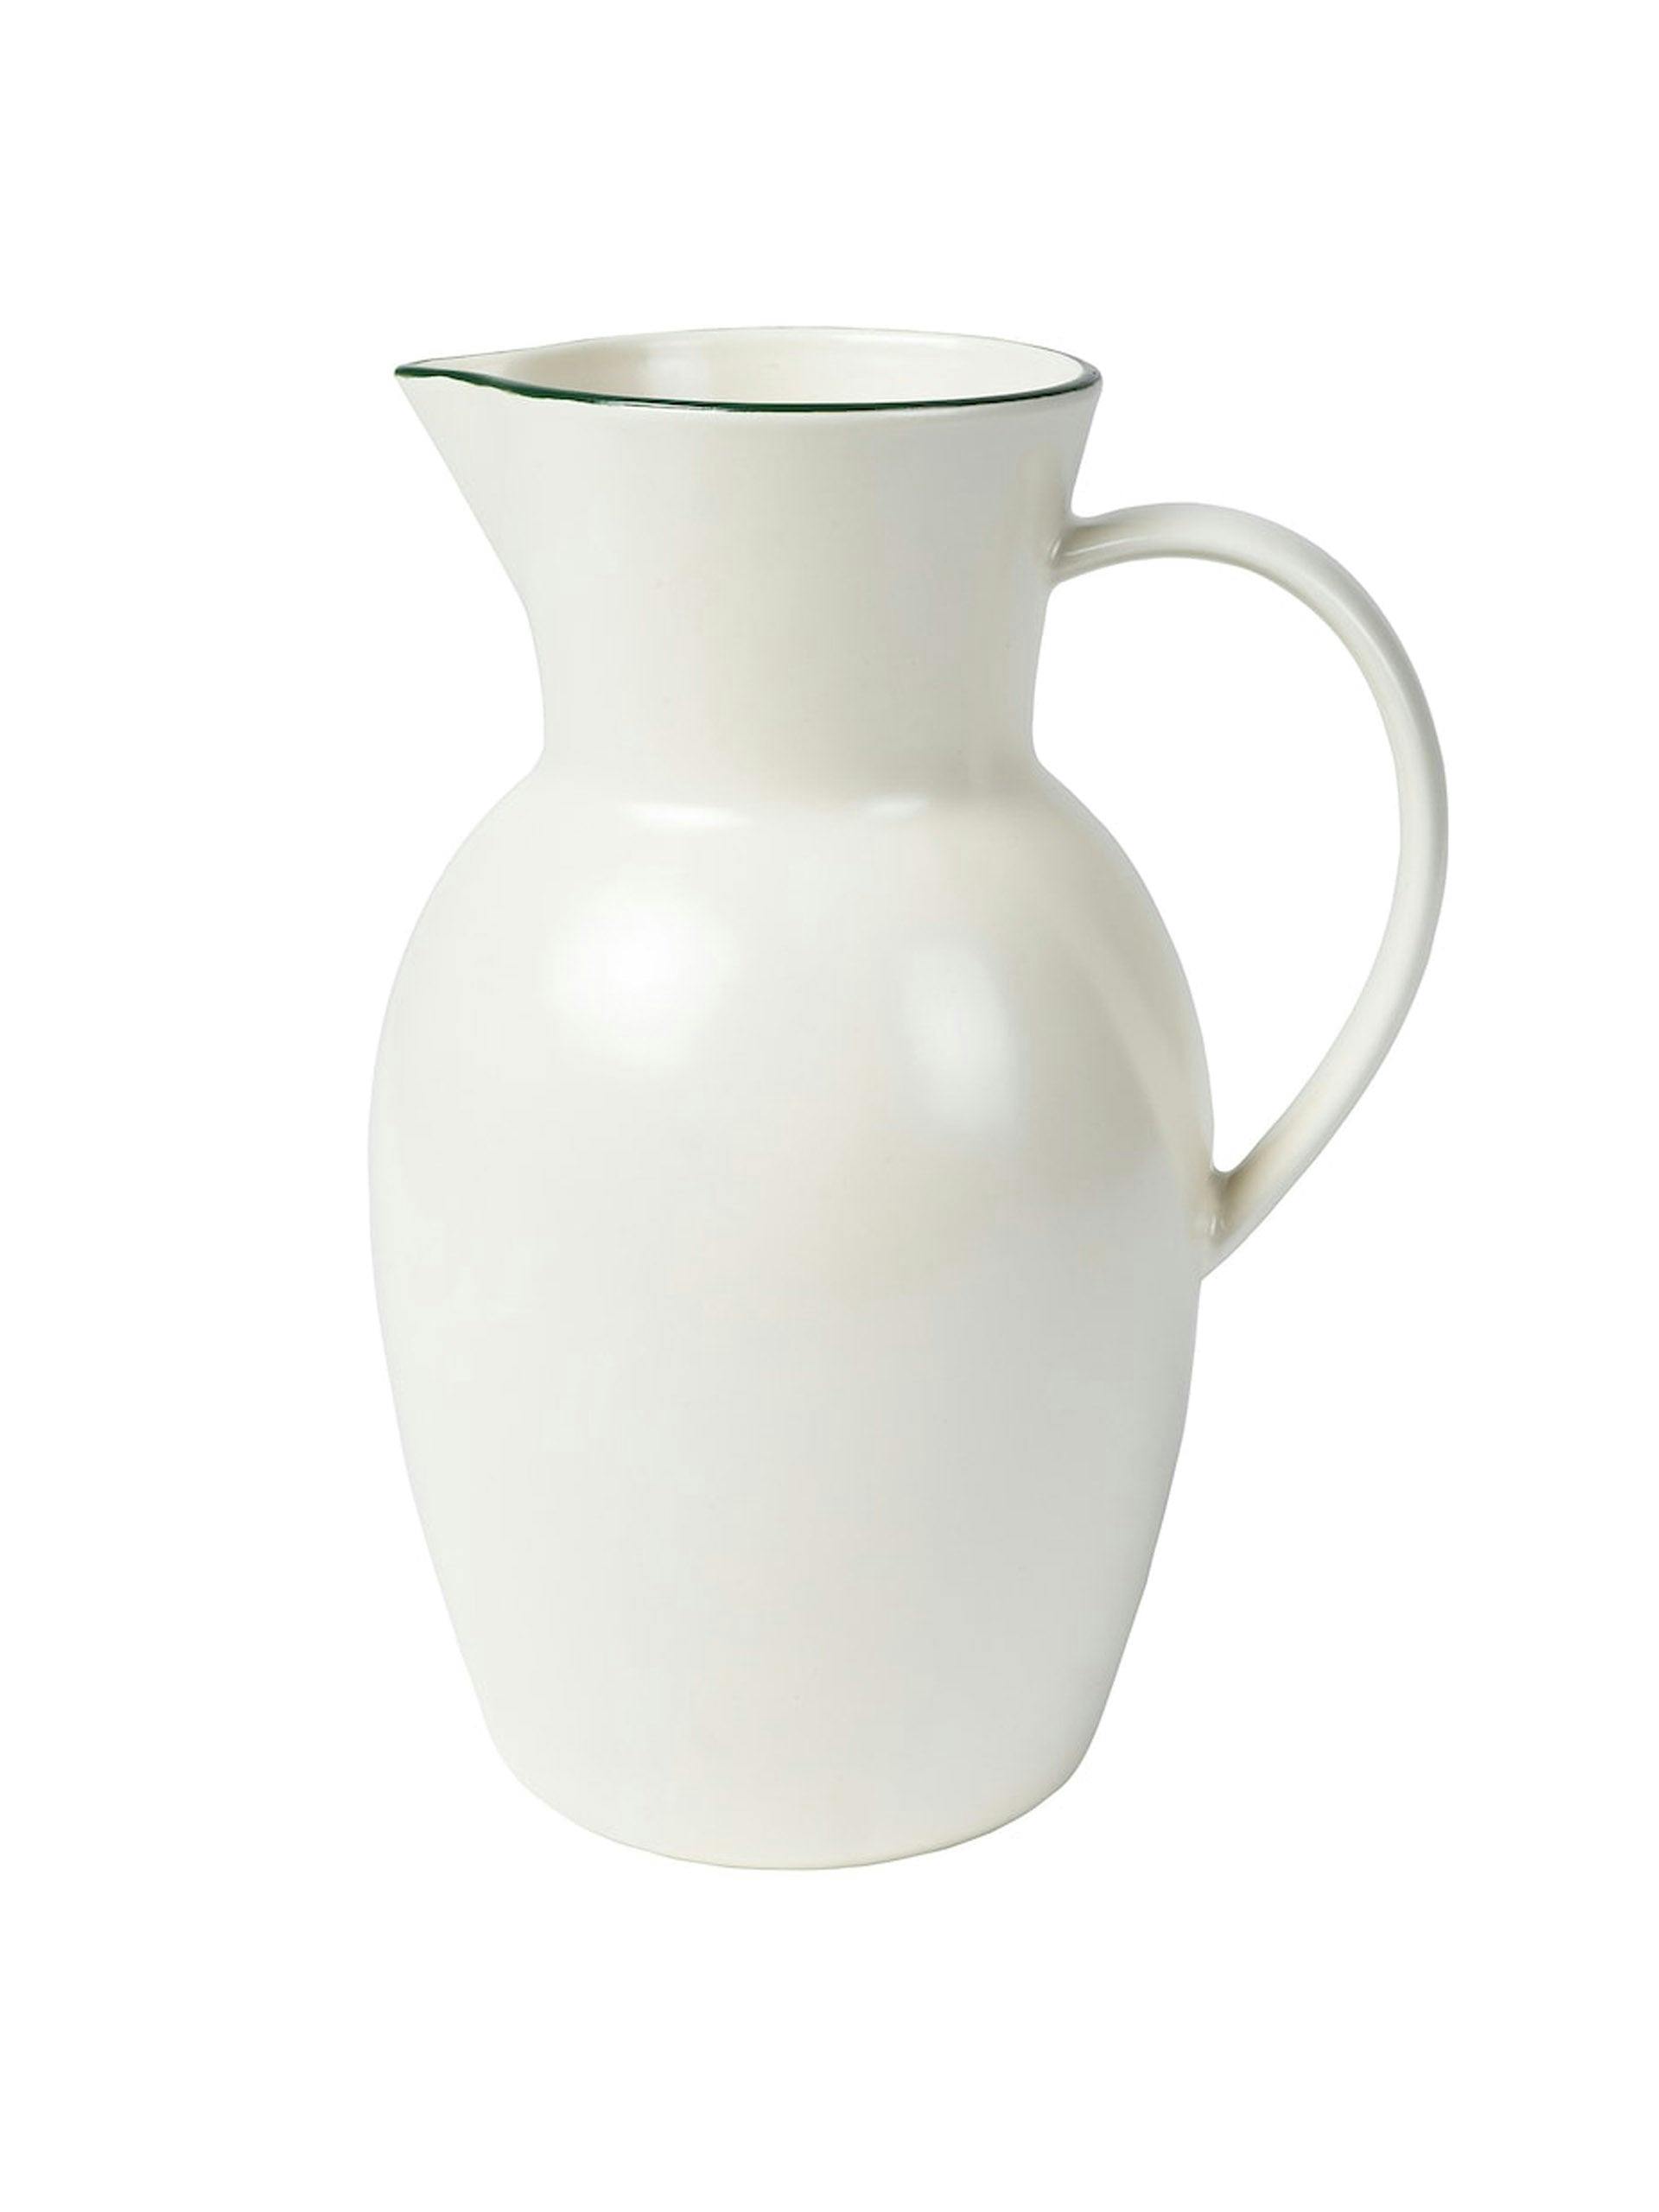 Off white jug